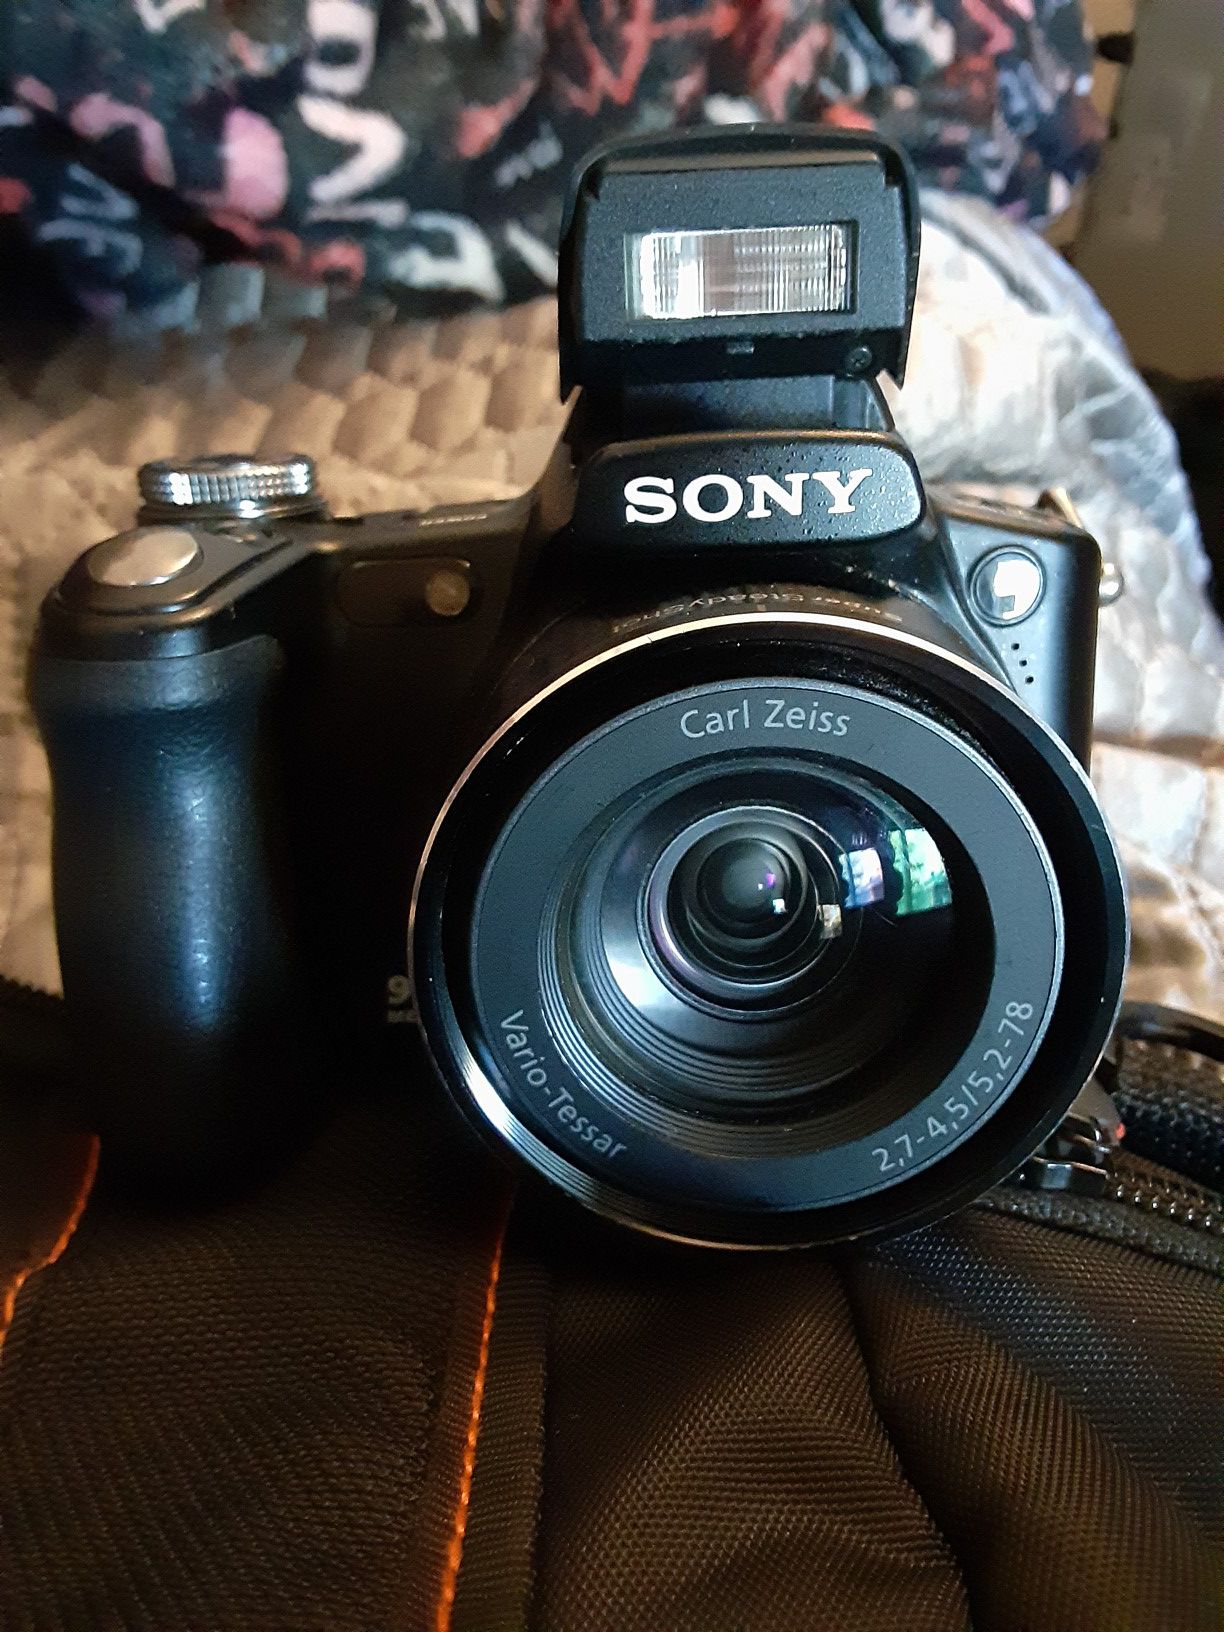 Sony Dsc-h50 digital camera